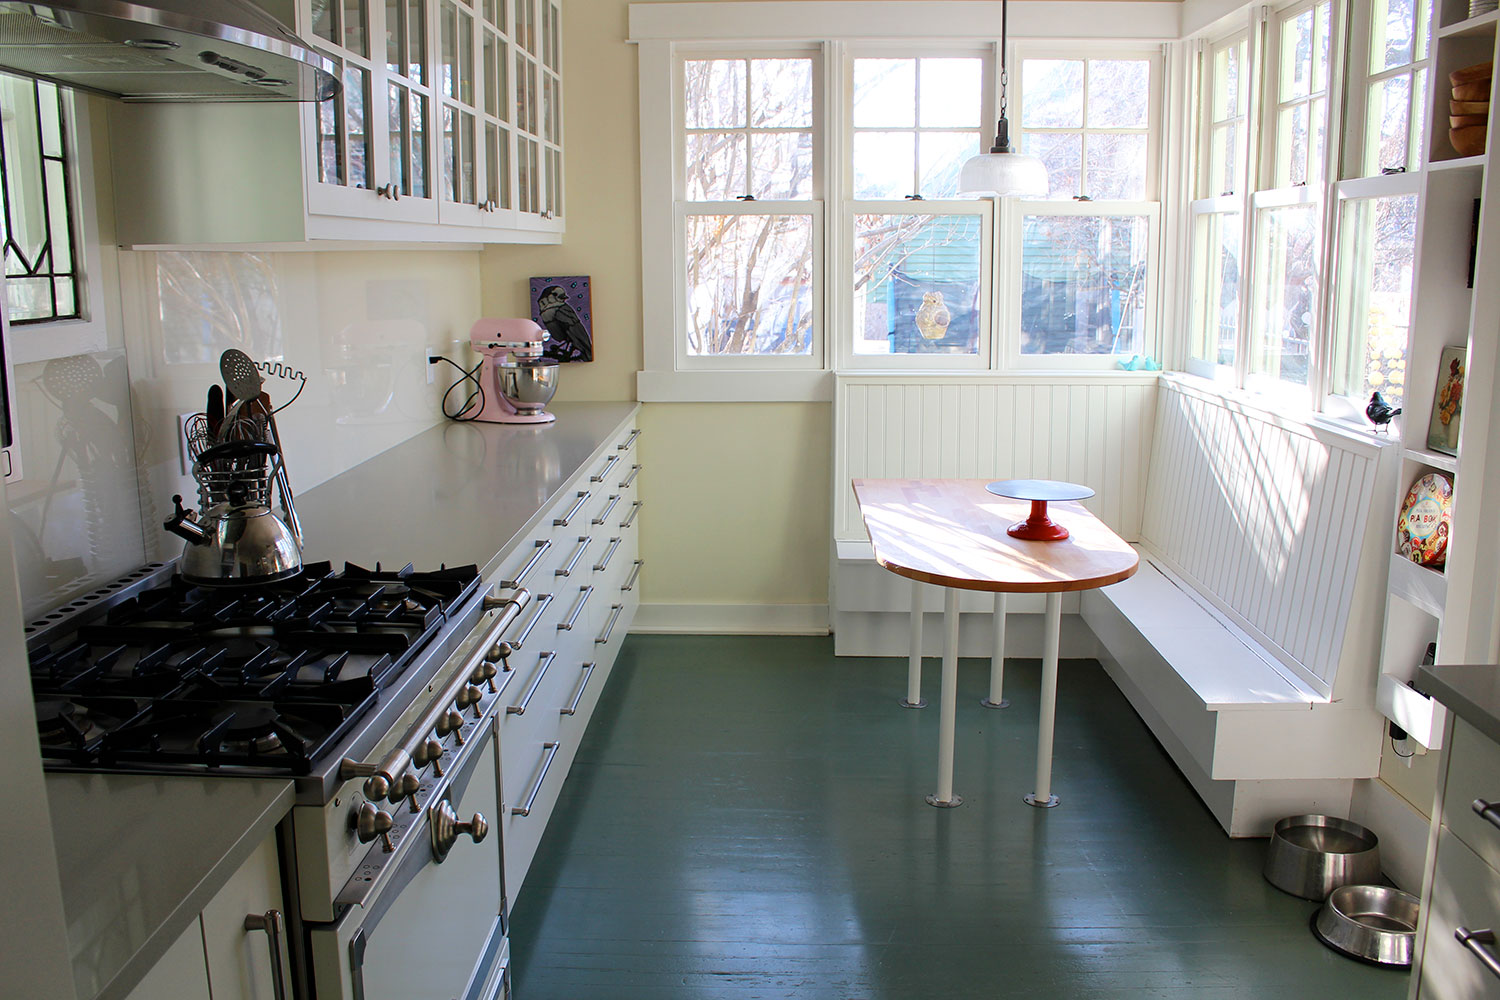 The kitchen, post-renovation. Courtesy Julie Van Rosendaal